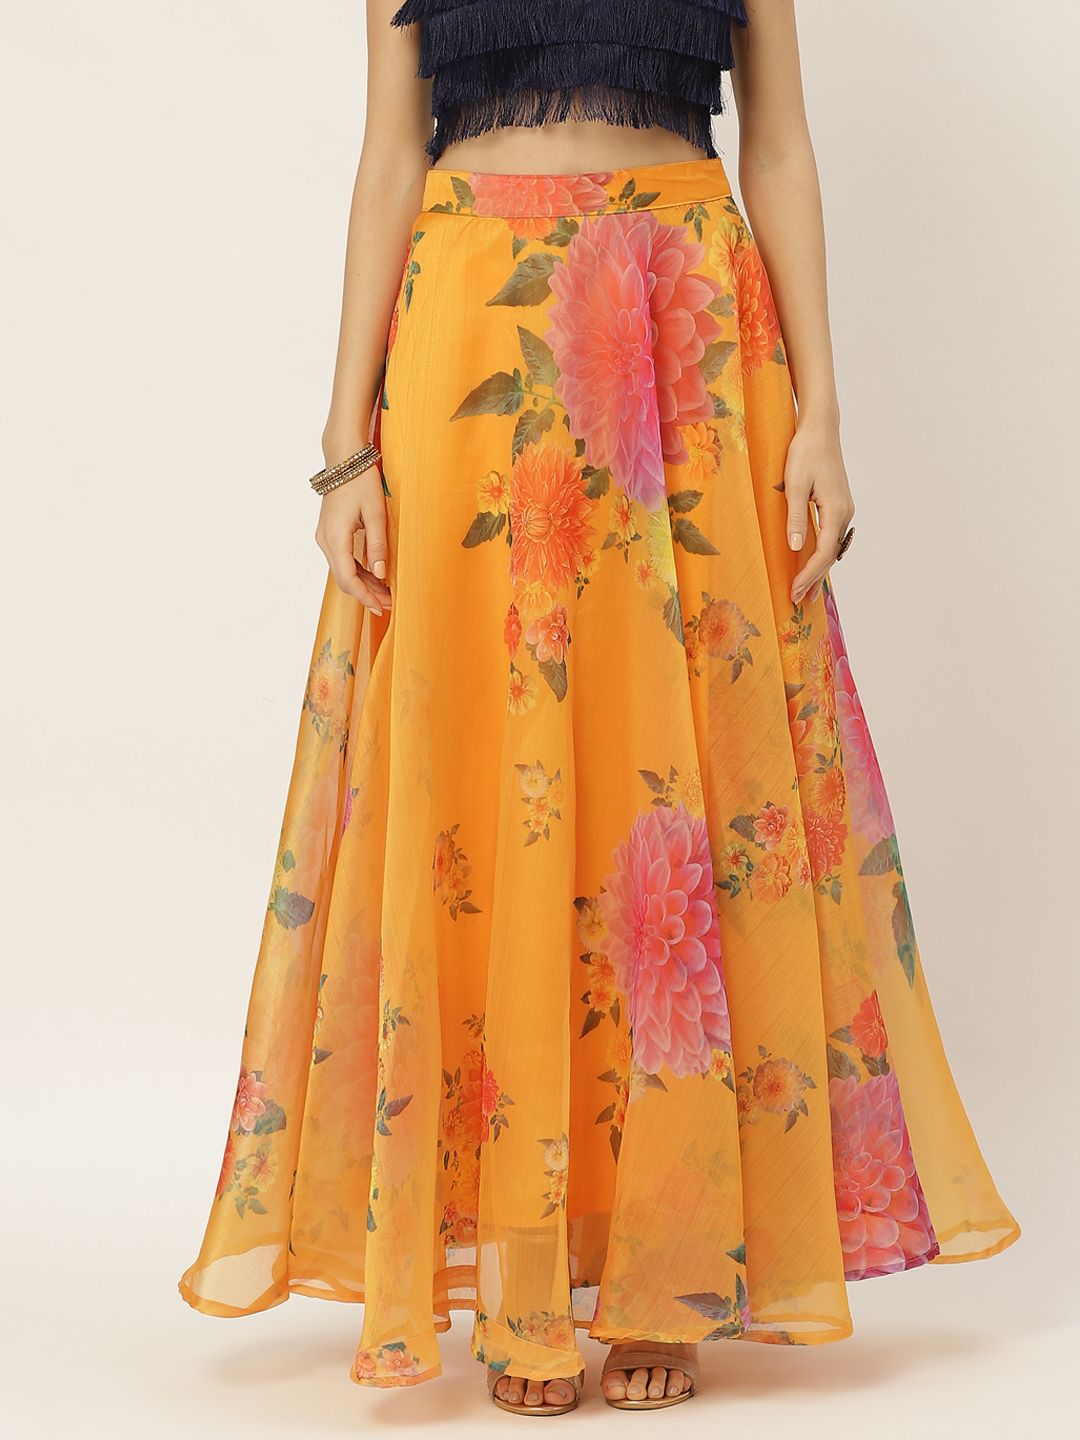 Studio Shringaar Mustard Yellow & Pink Floral Print Lehenga Skirt Price in India